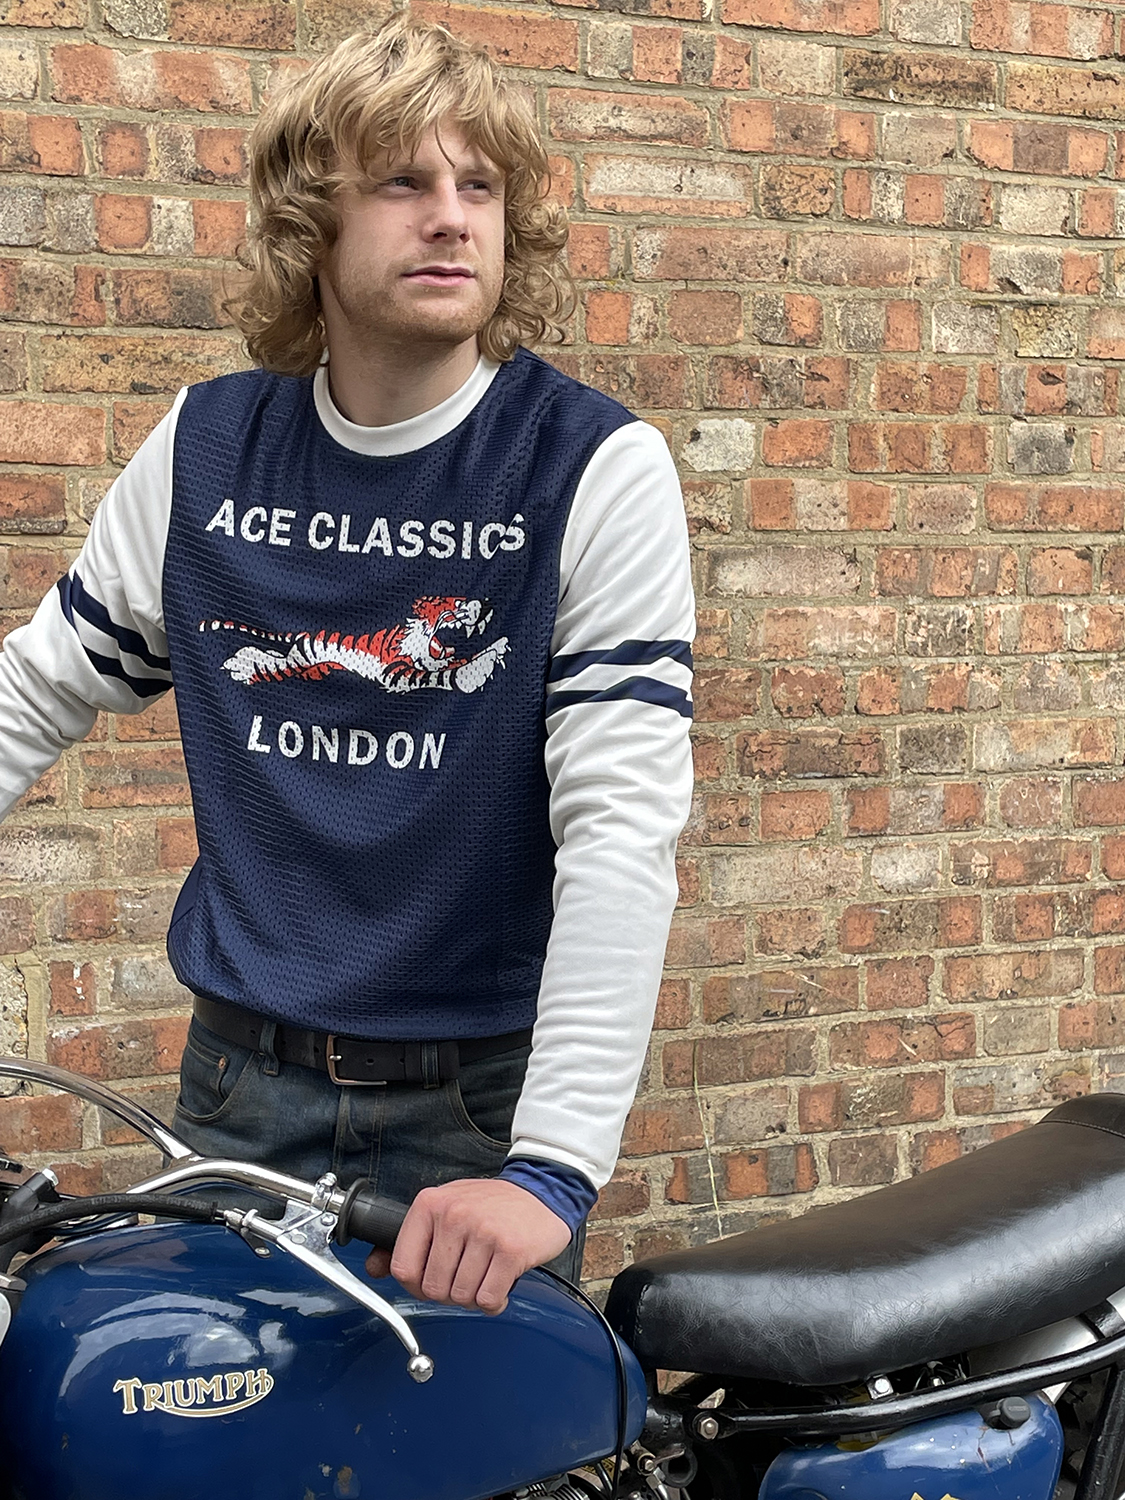 Ace Classics – Vintage - Ace Classics